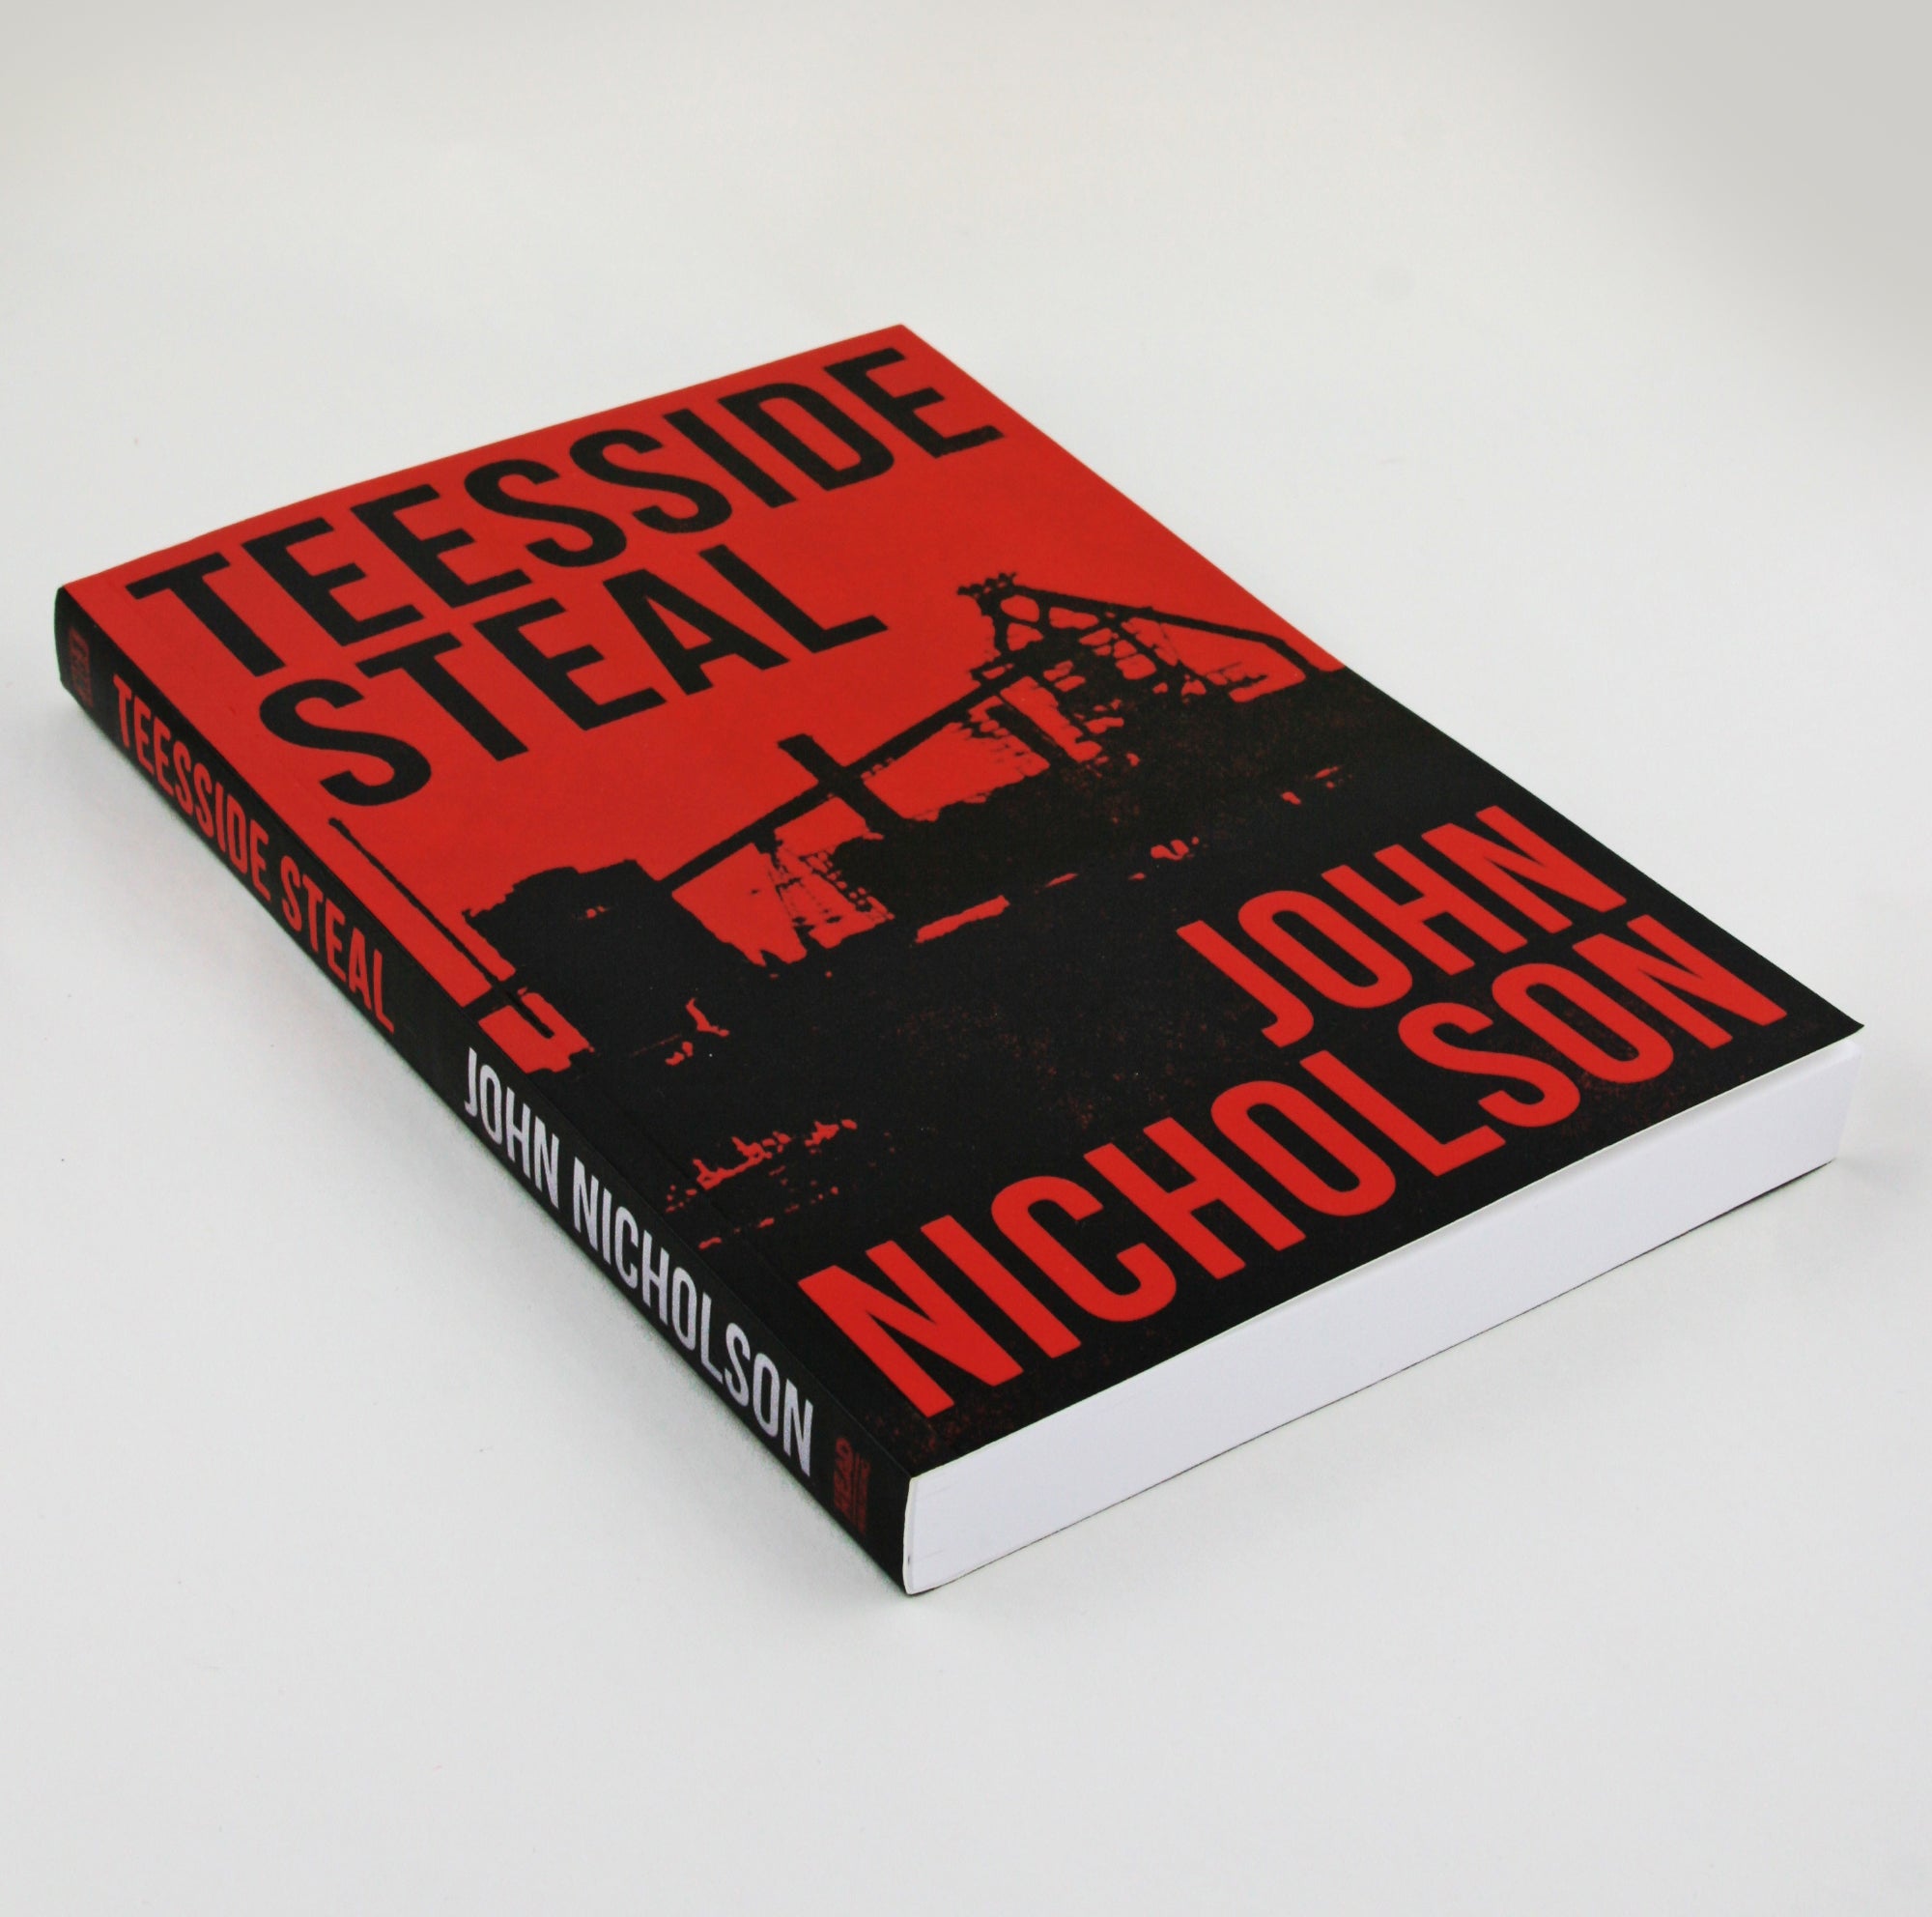 Teesside Steal by John Nicholson